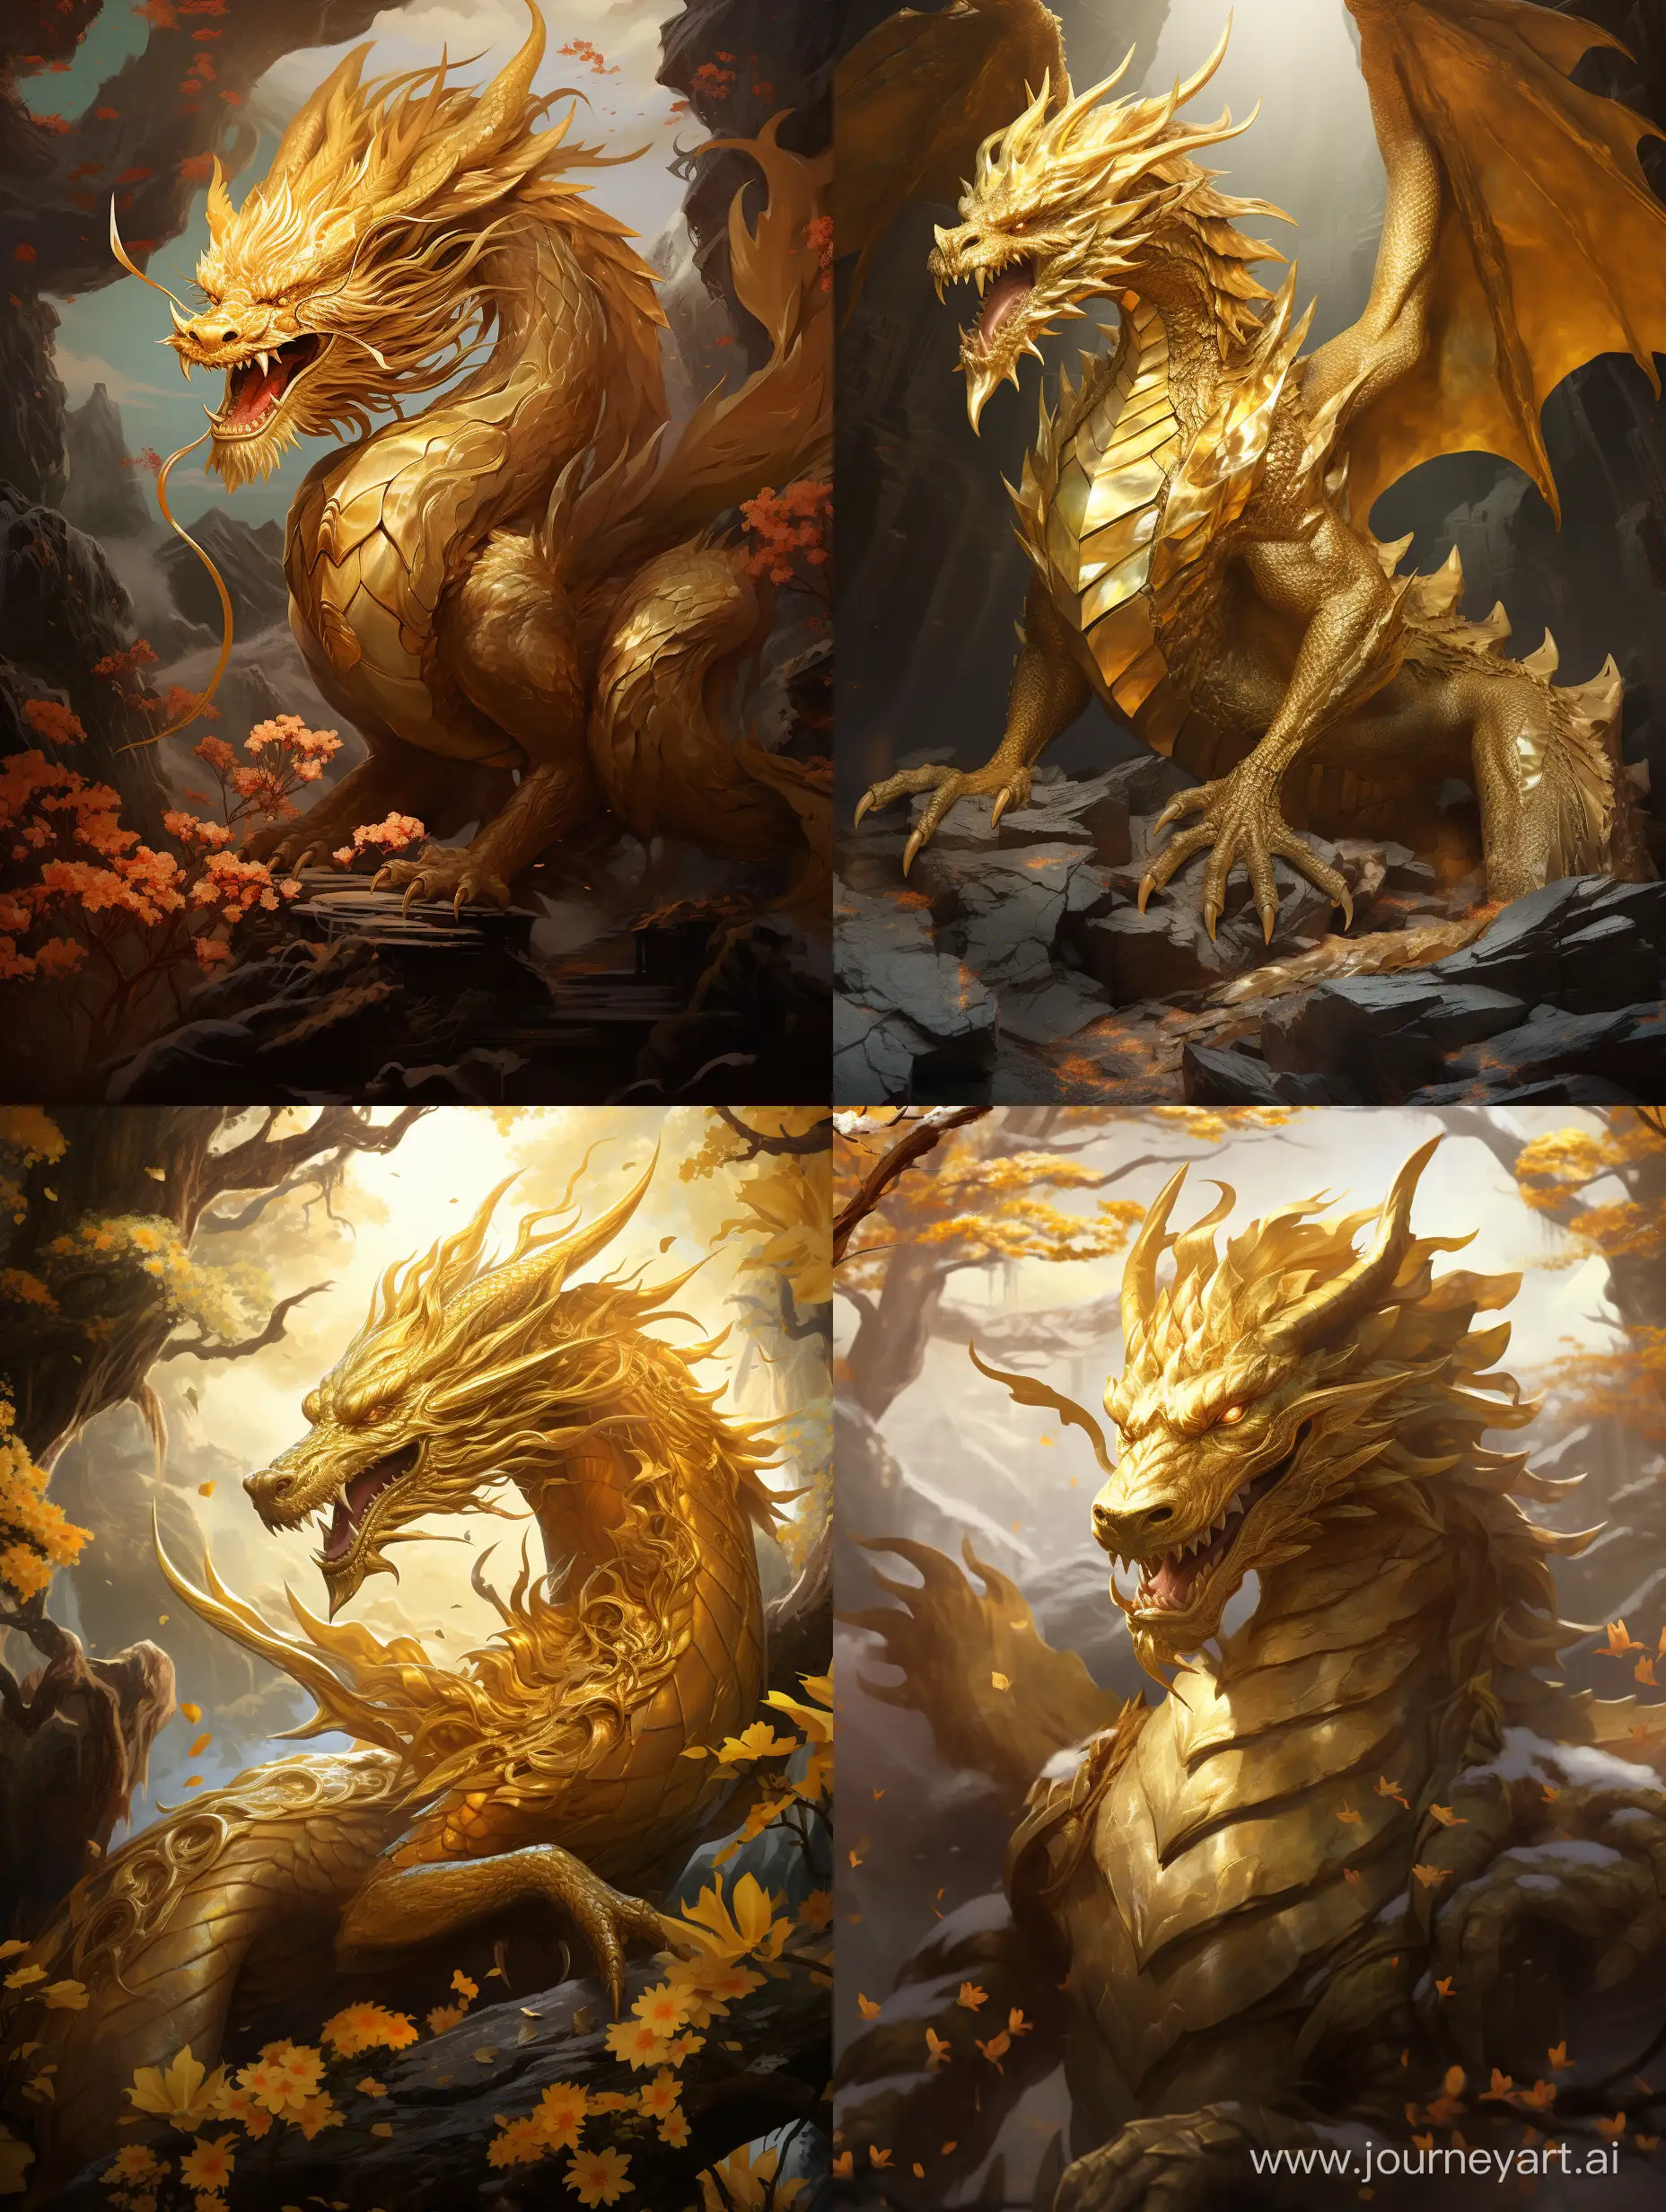 Majestic-Golden-Dragon-Artwork-with-a-34-Aspect-Ratio-Enchanting-Fantasy-Creature